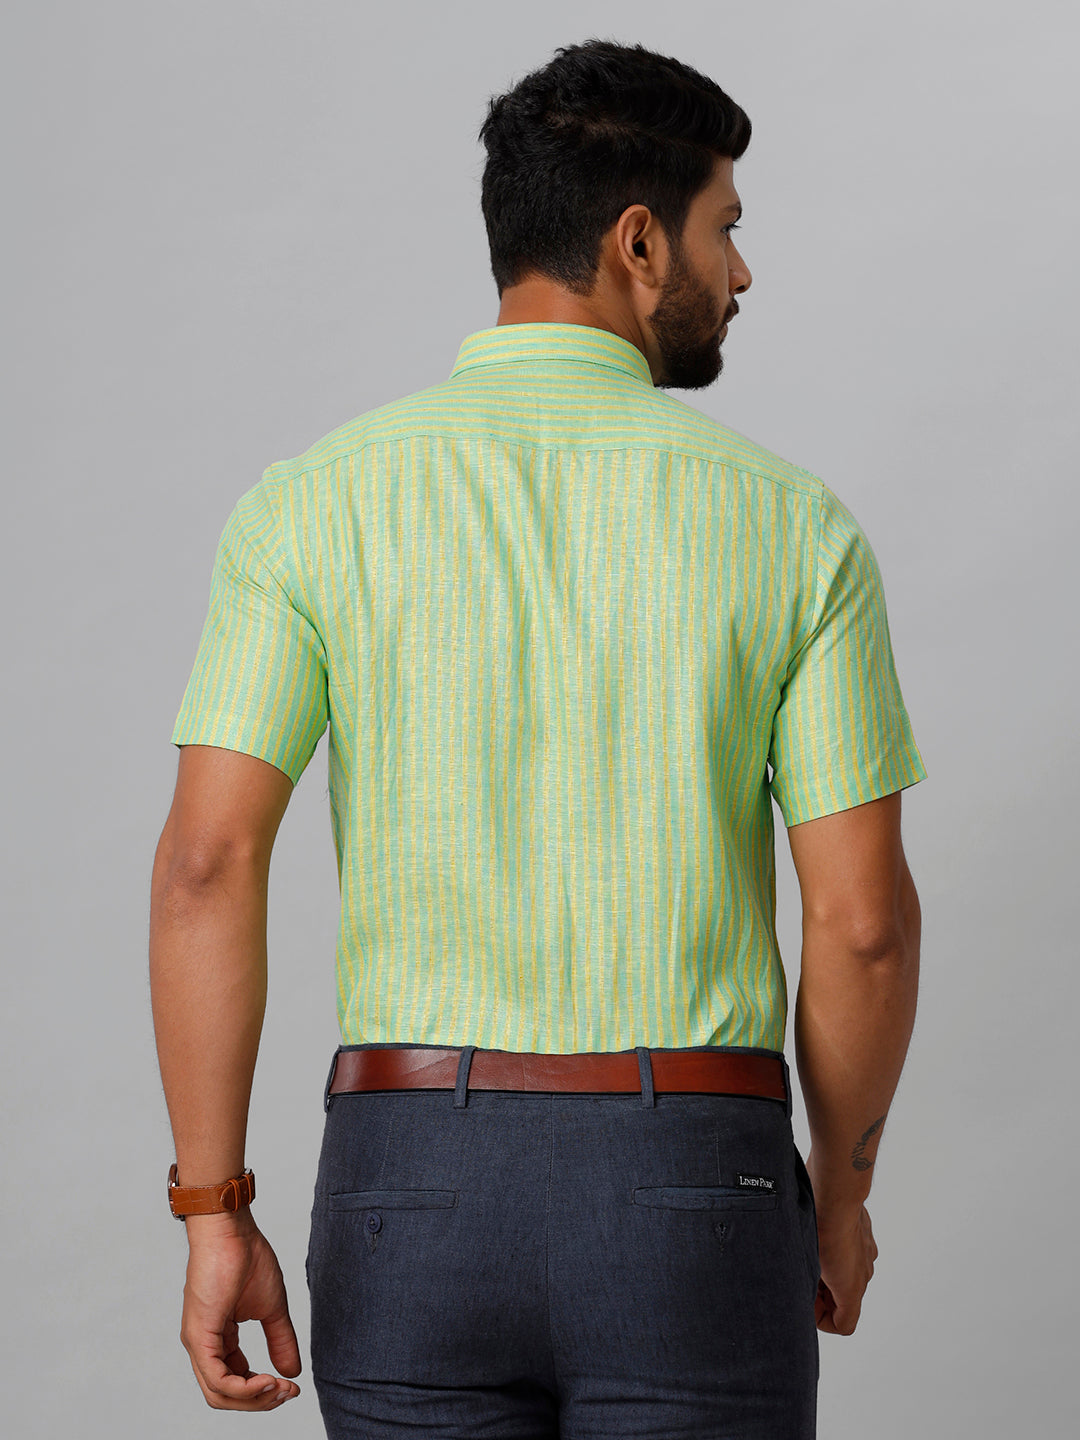 Mens Pure Linen Striped Half Sleeves Green & Yellow Shirt LS6-Back view